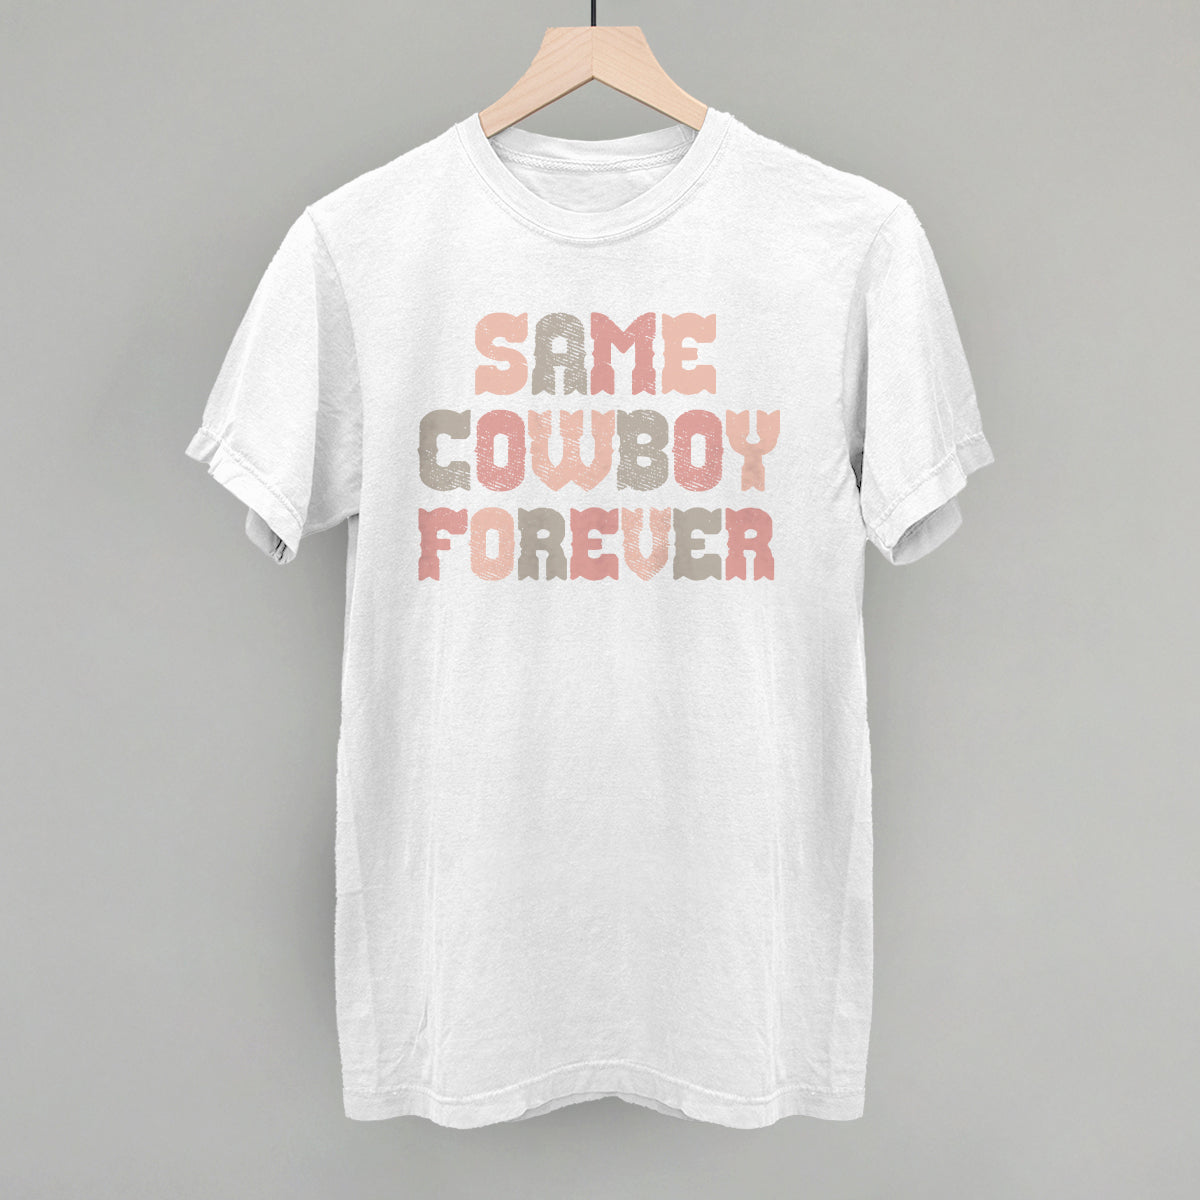 Same Cowboy Forever (Multi)